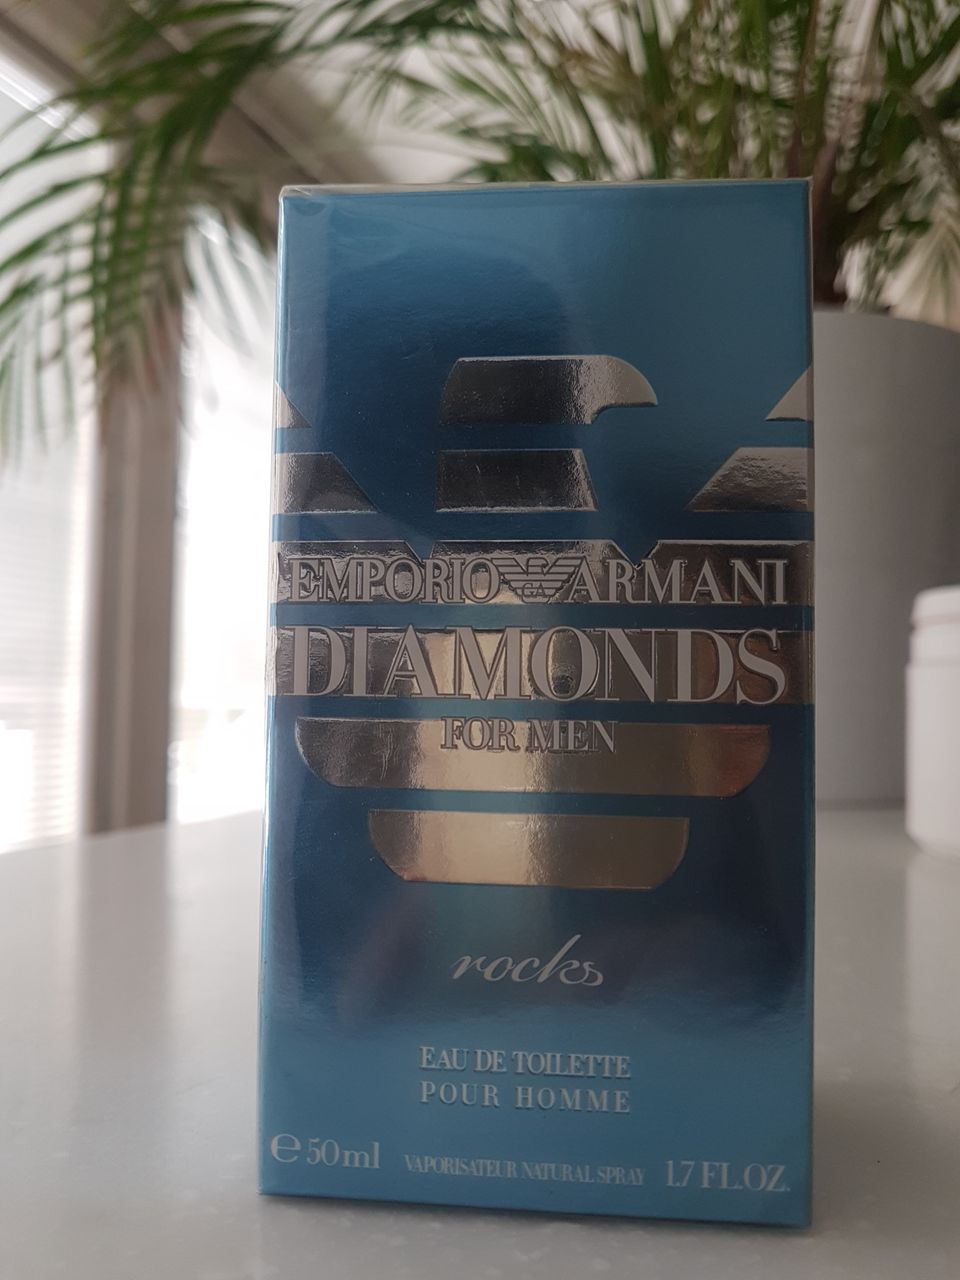 Armani diamonds rocks for men 50ml